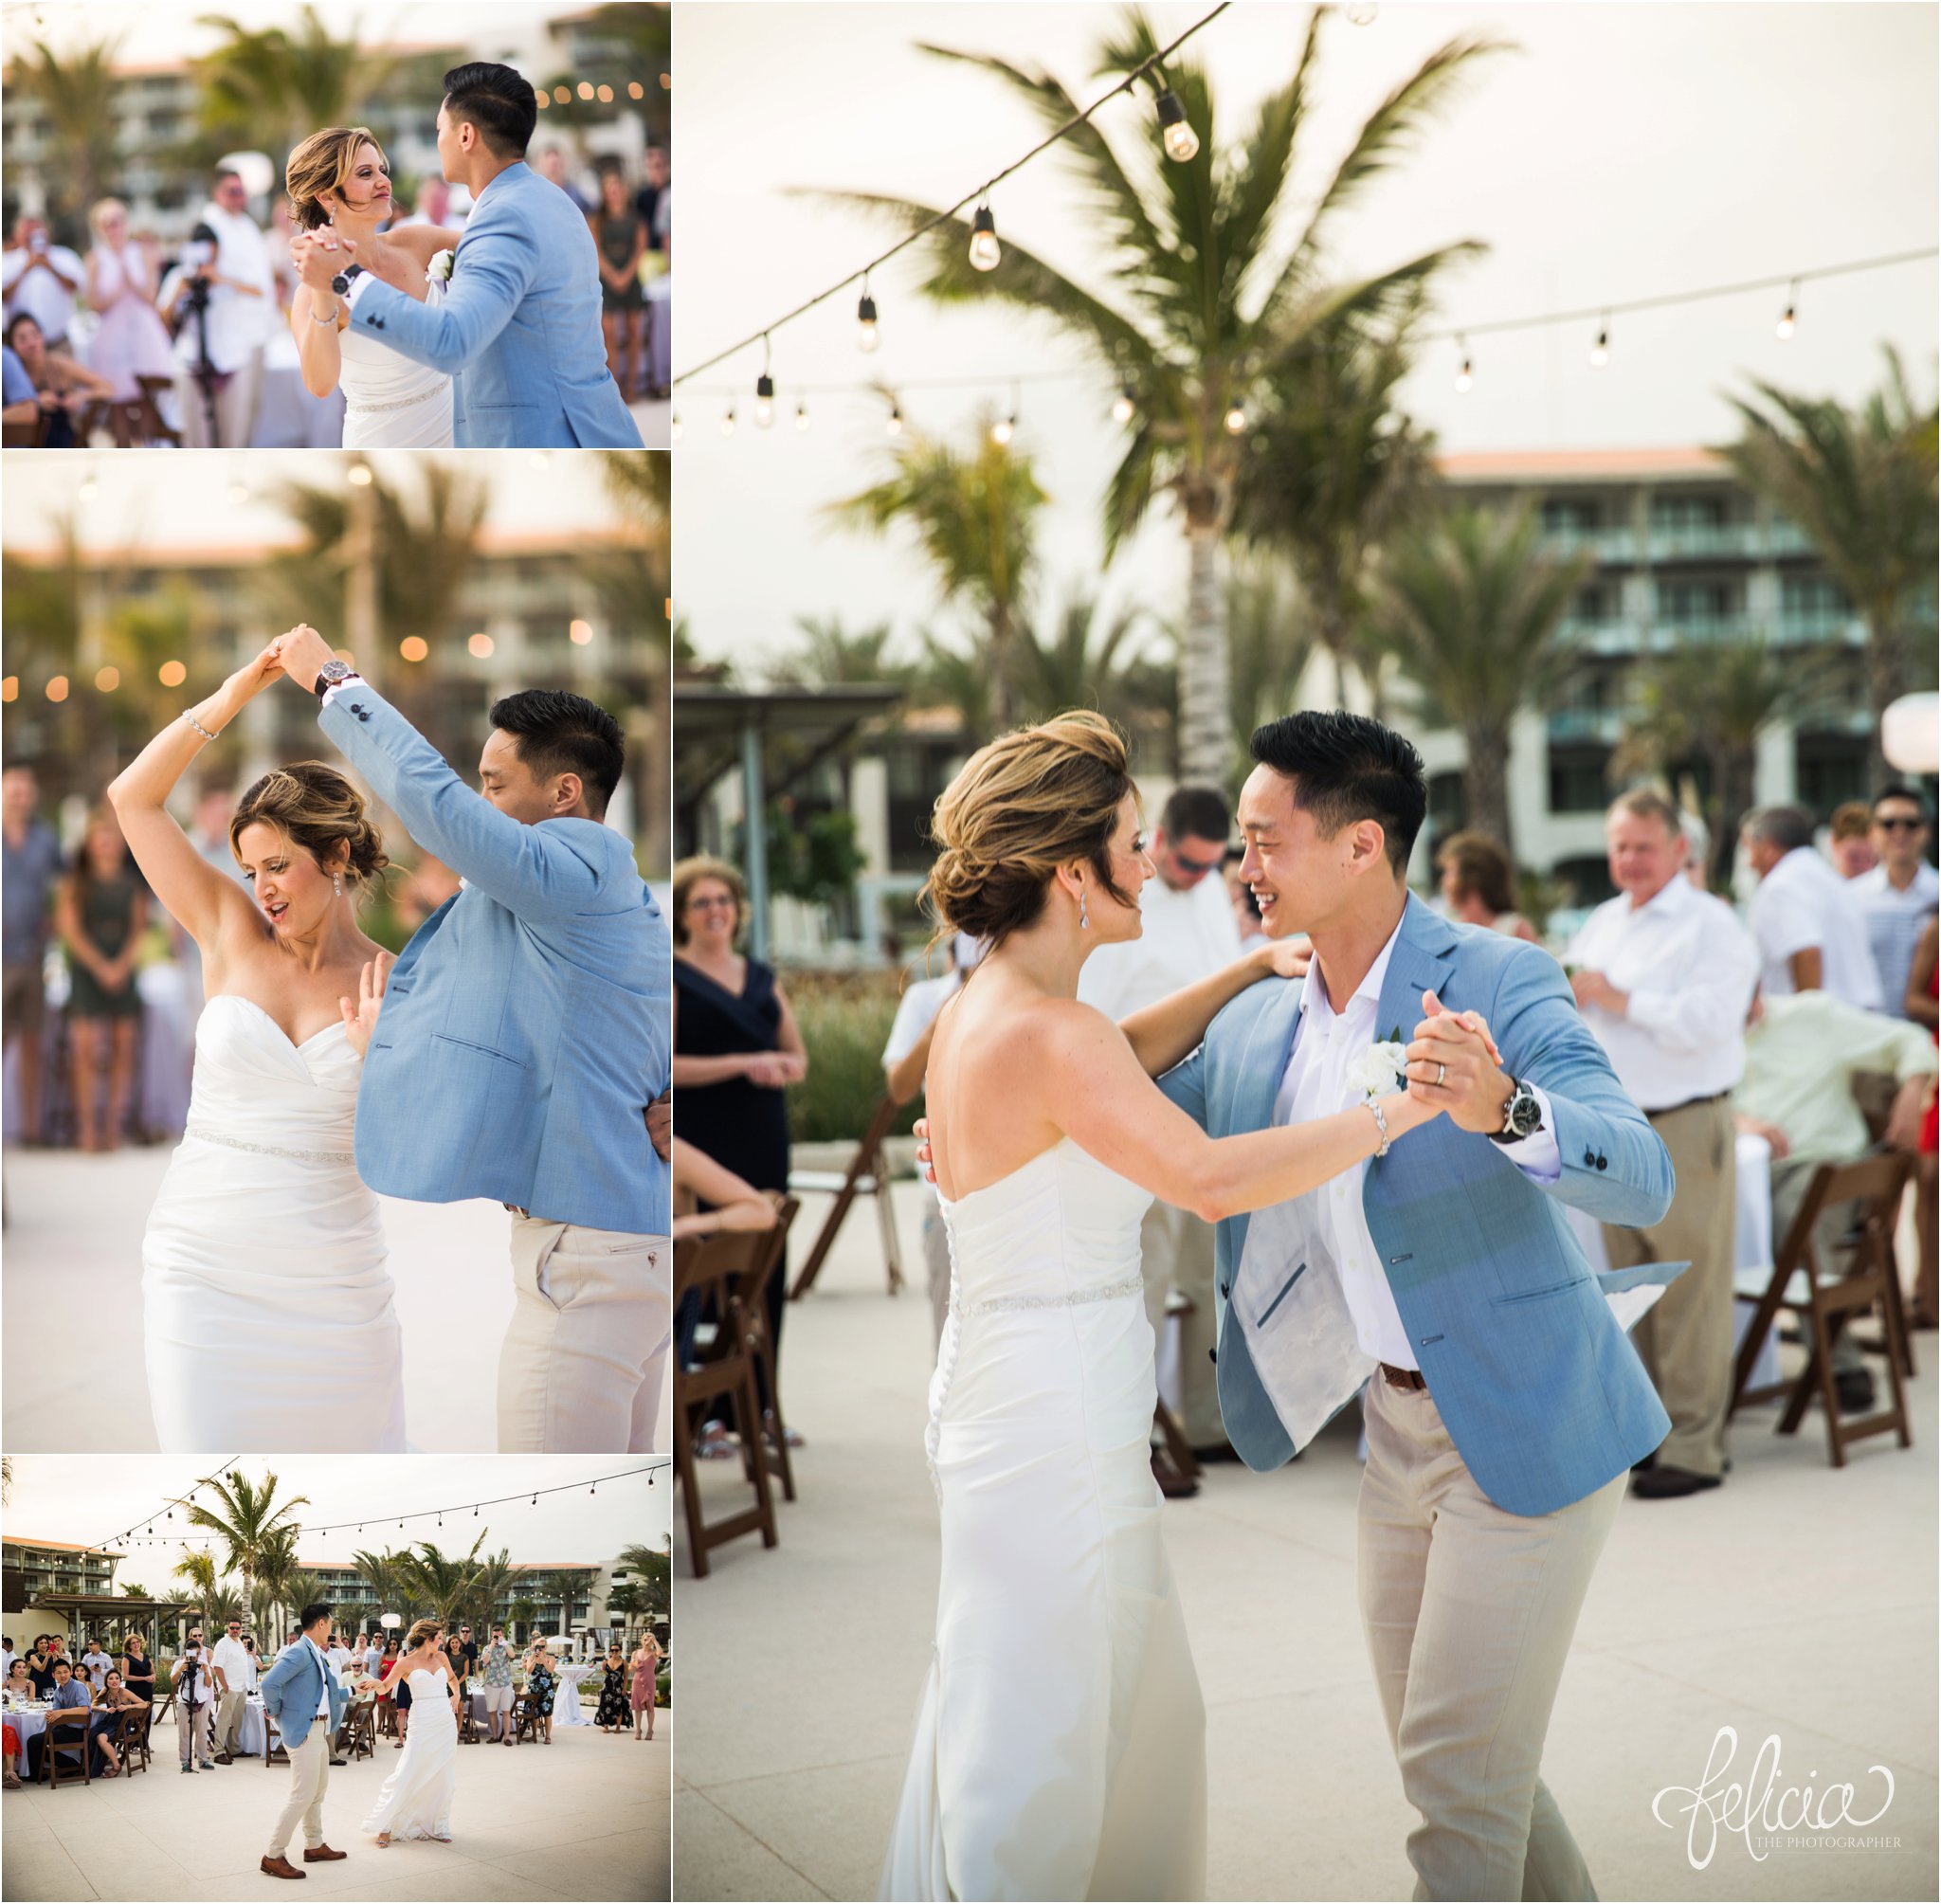 images by feliciathephotographer.com | Destination Beach Wedding | Unicco 20 87 | Photographer | L&S Travel | reception | first dance | groovy | chic | palm trees | silly | joyful | fun | chic | celebration | party | twirl 